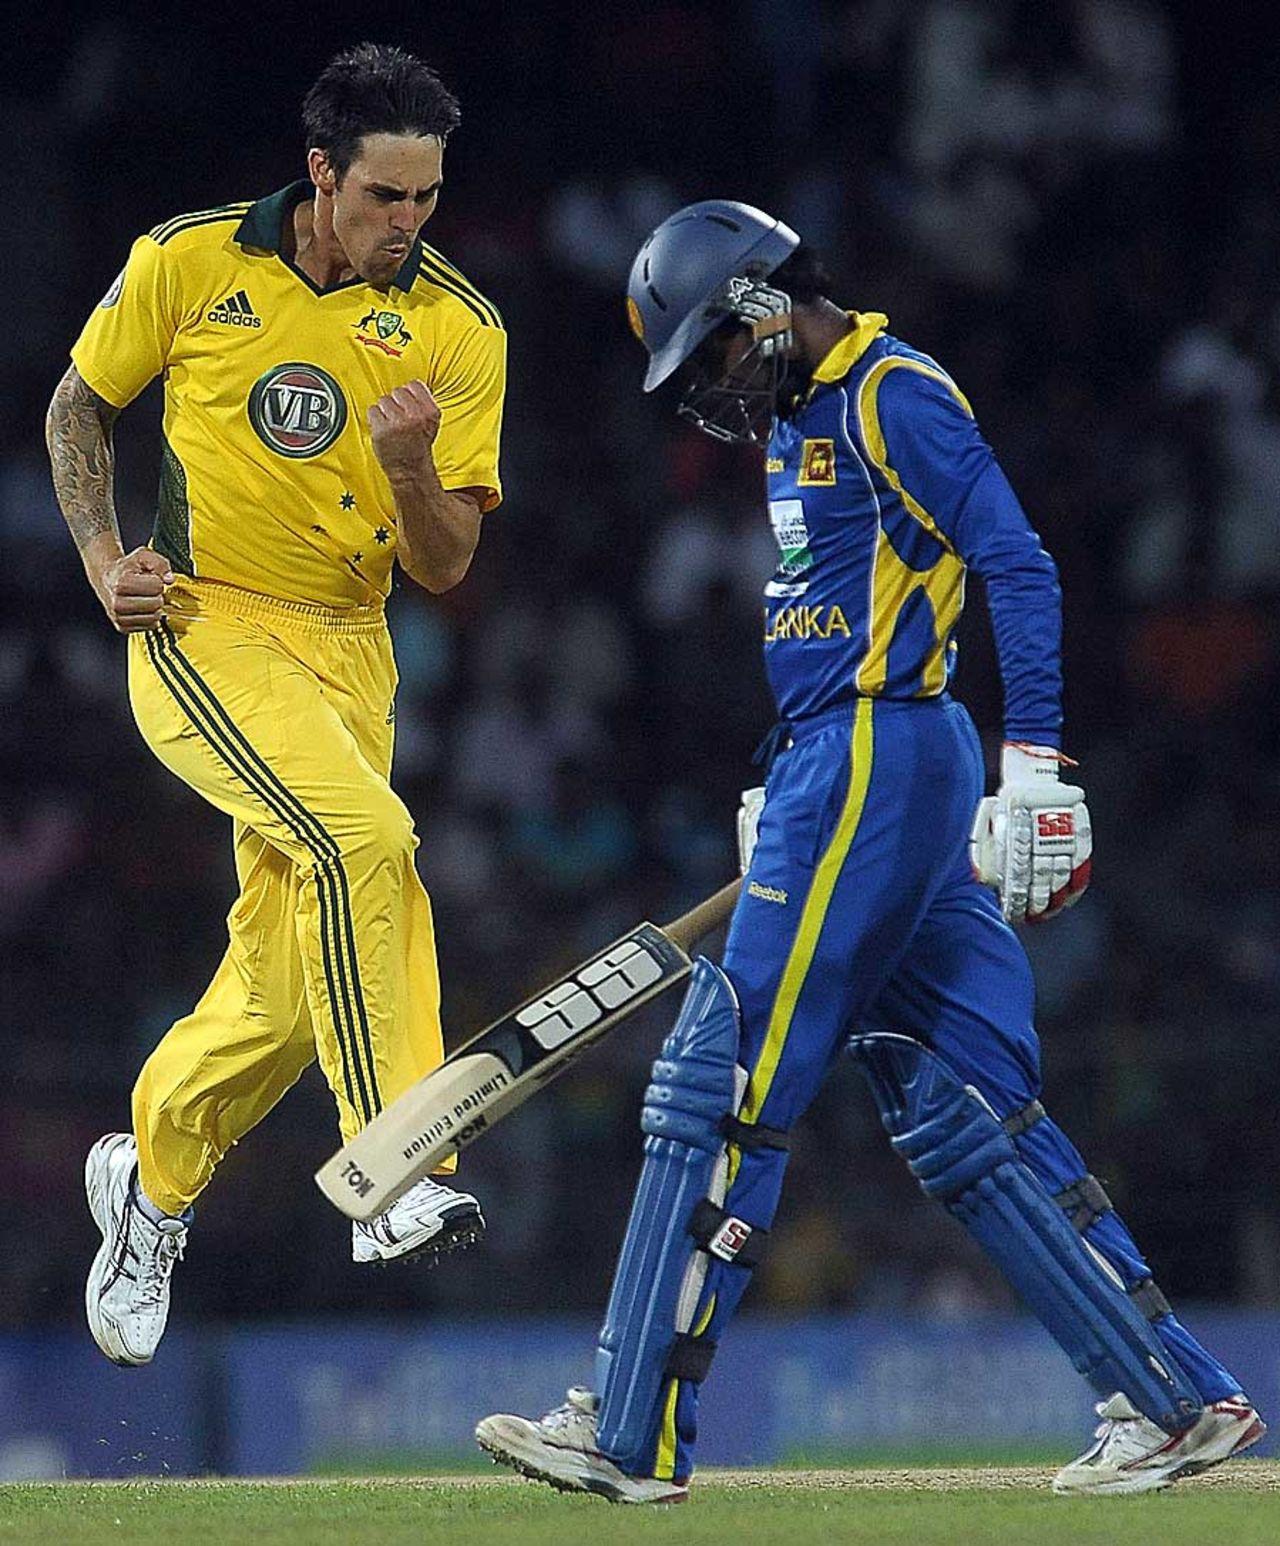 Mitchell Johnson dismissed Upul Tharanga early, Sri Lanka v Australia, 5th ODI, Colombo, August 22, 2011